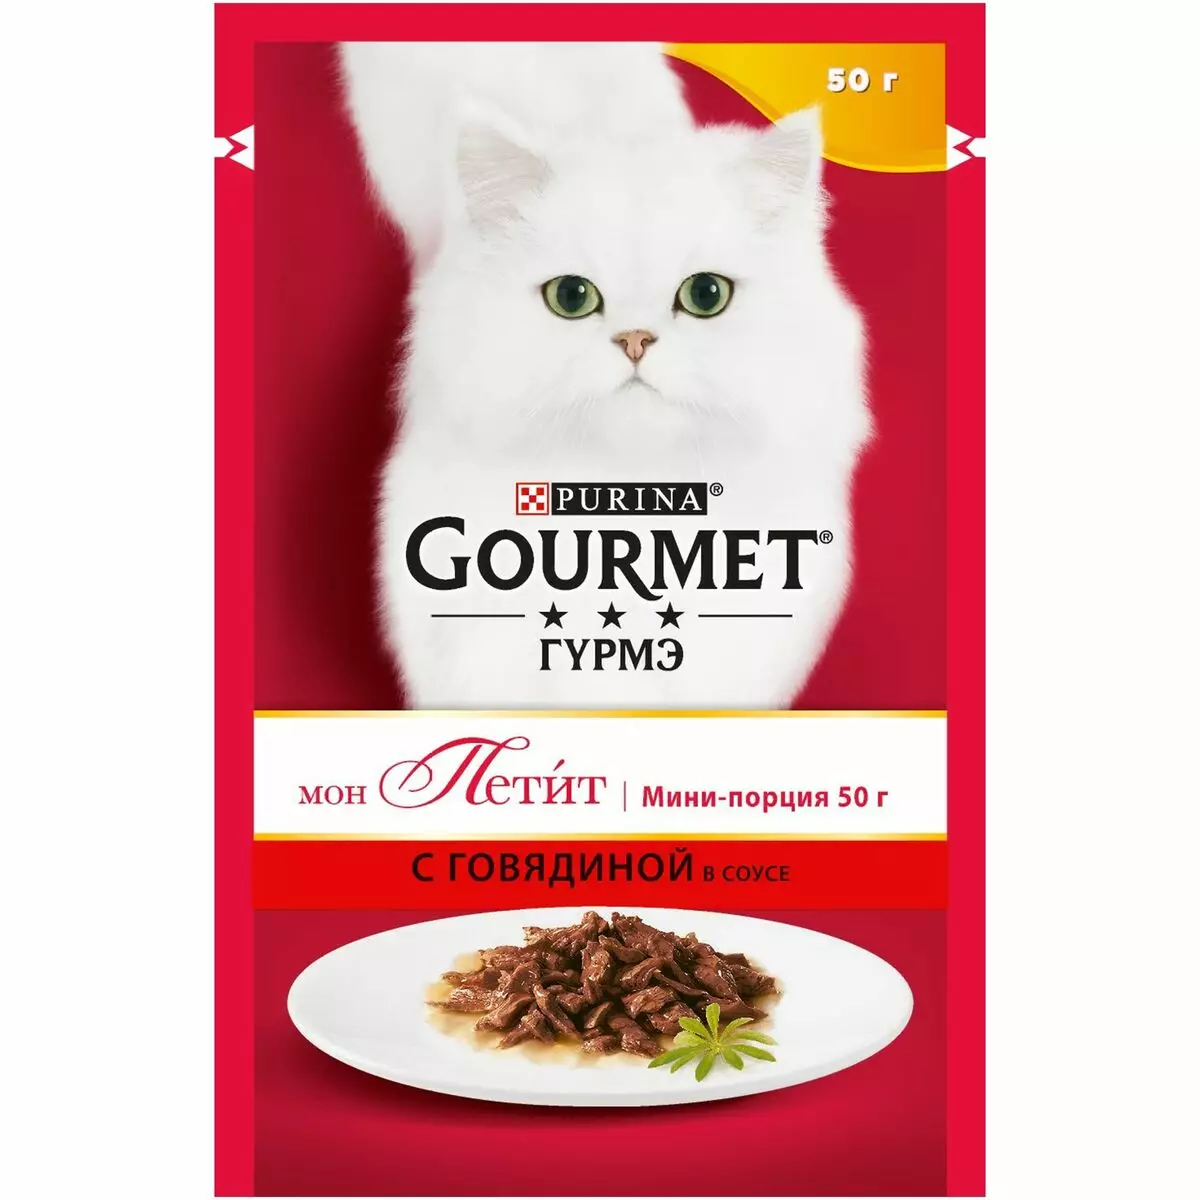 Gourmet: Feed Cat dan Purina Kittens, Wet Pates dan Feline Feline lain, komposisi mereka, ulasan 22711_39